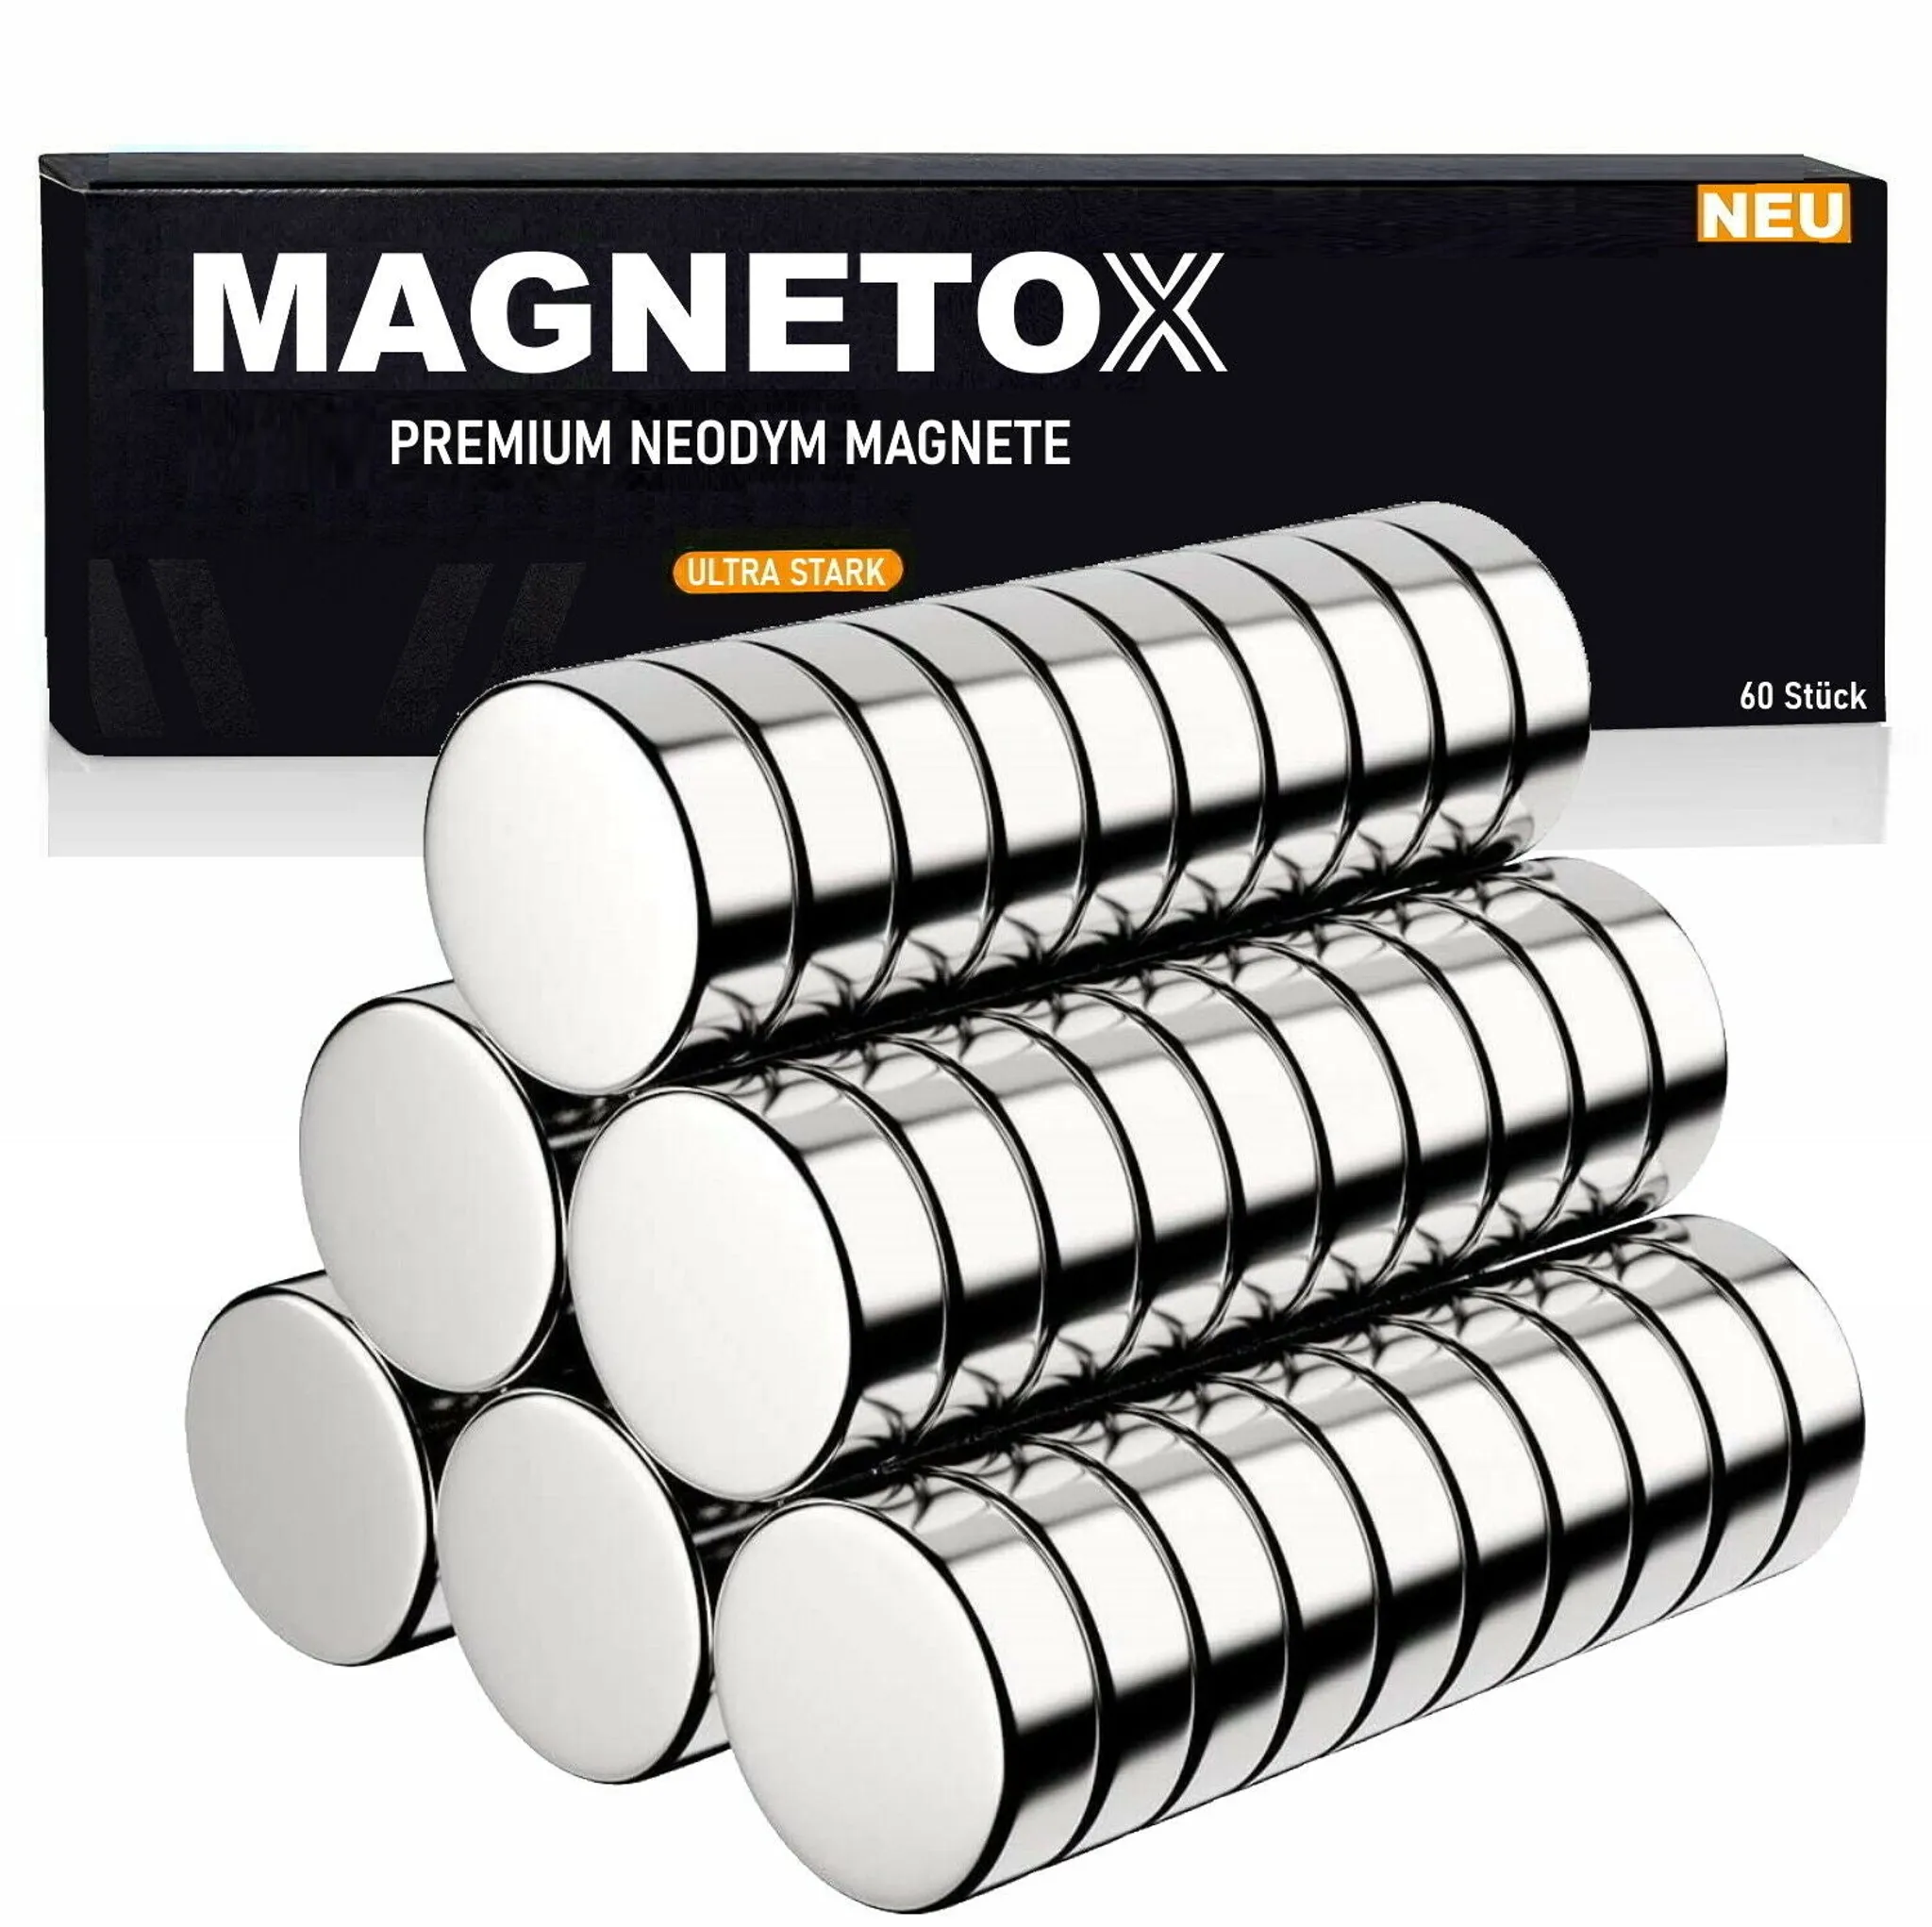 MAGNETOX [60x] Neodym Magnete Ultra Stark